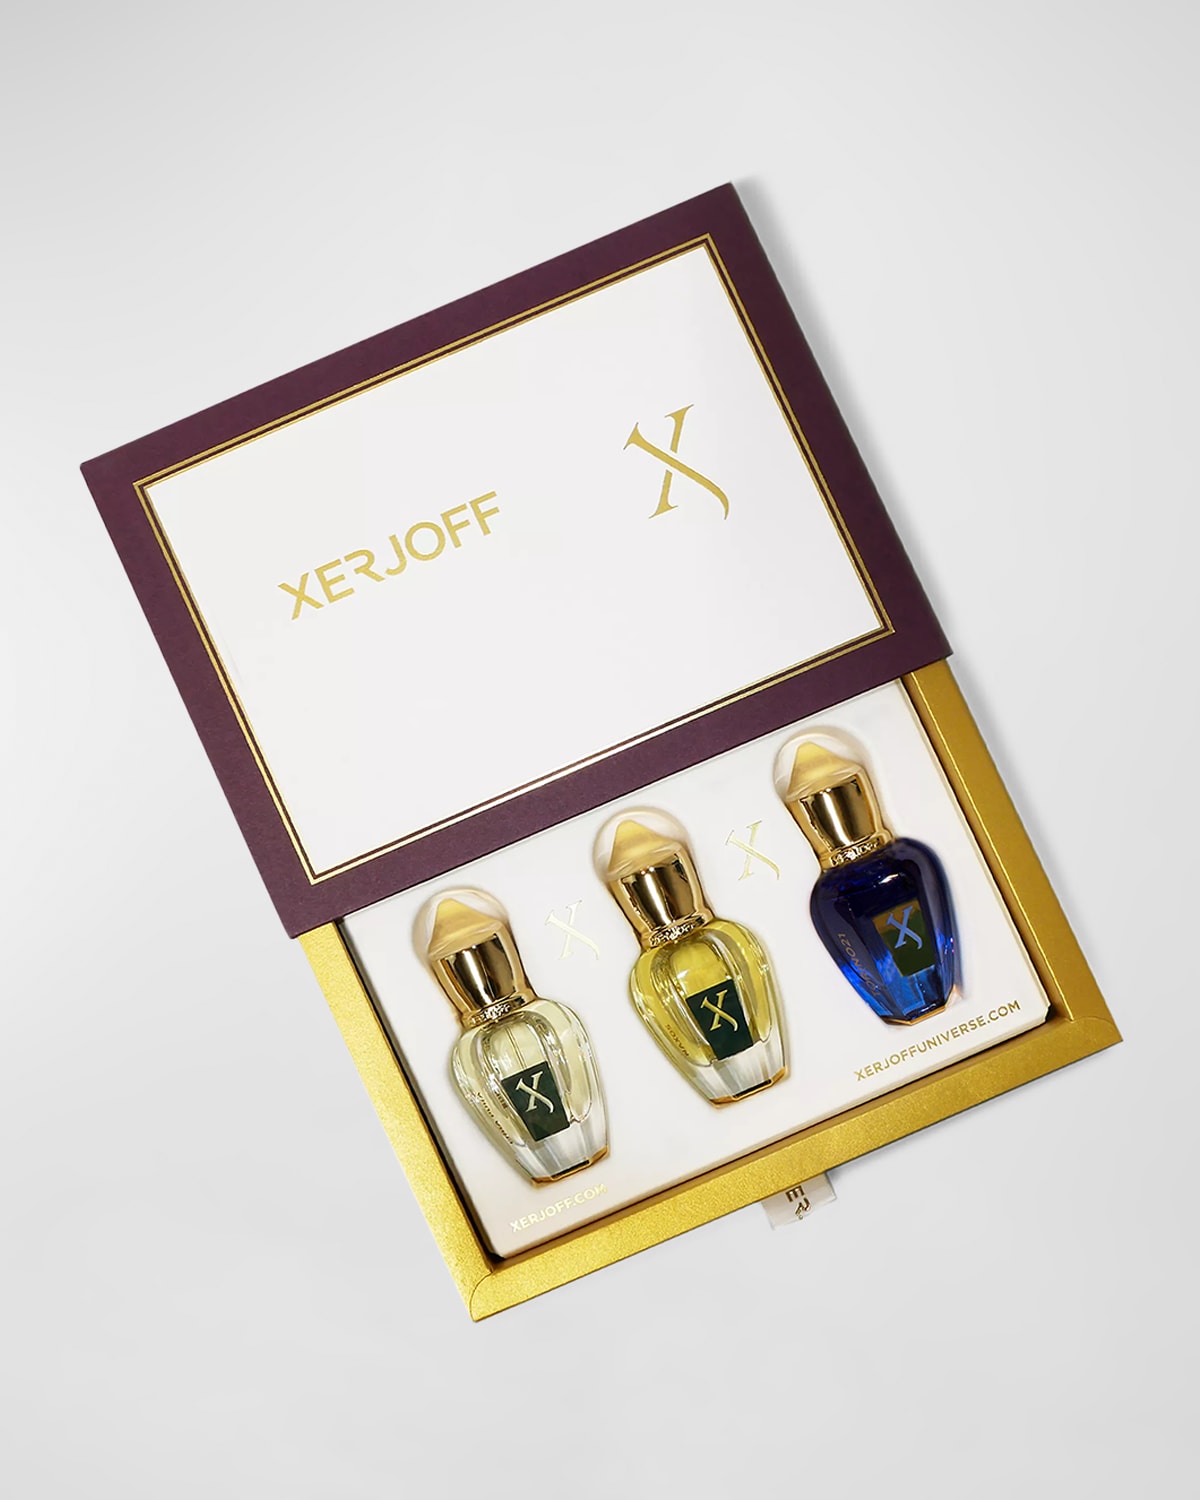 Neiman Marcus Exclusive Xerjoff Fragrance Set, 3 x 0.5 oz.